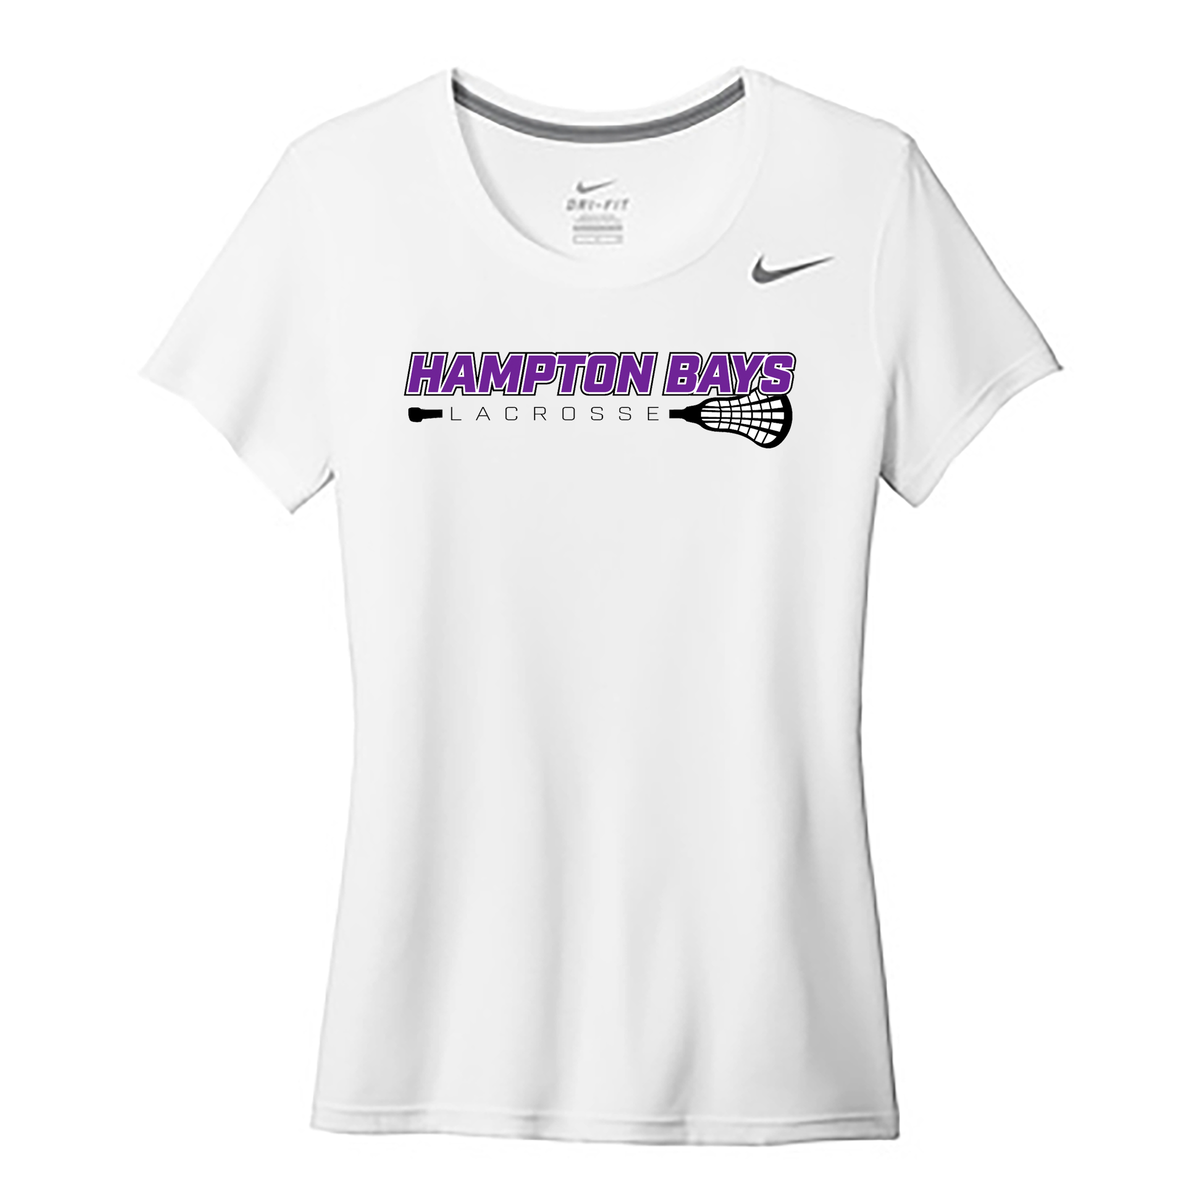 Hampton Bays Lacrosse Nike Ladies Legend Tee